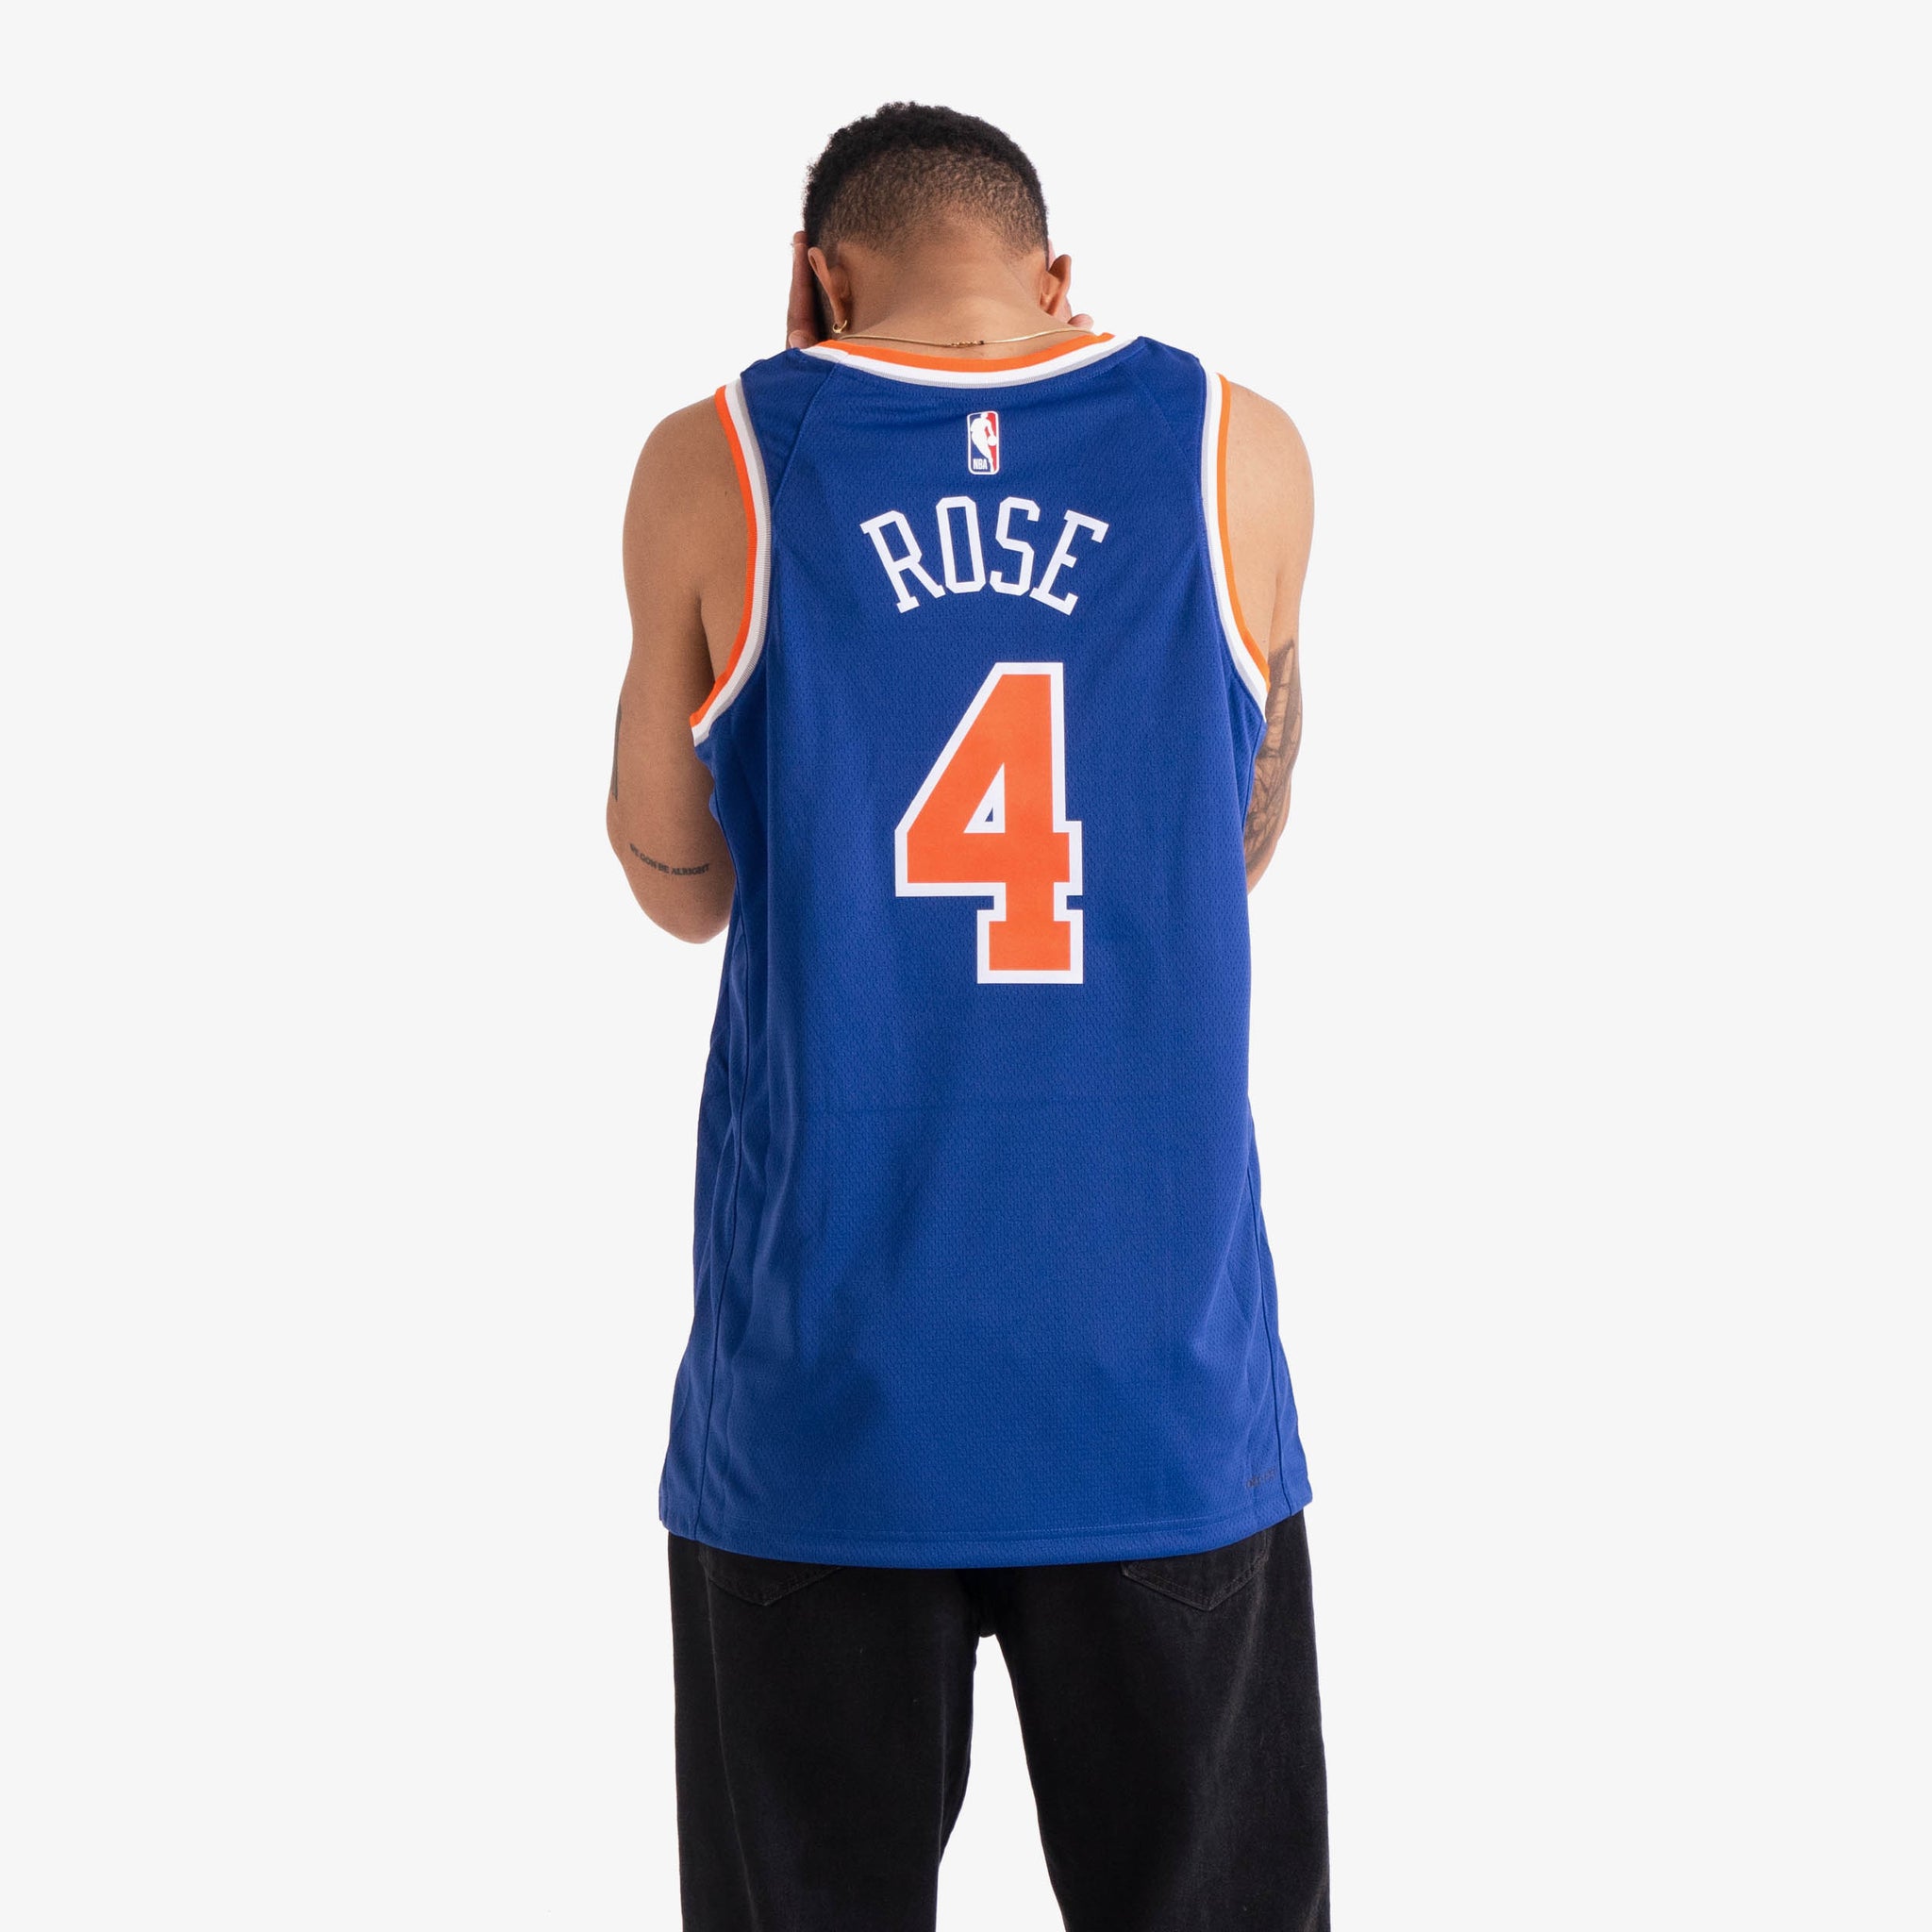 Other, D Rose Knicks Jersey